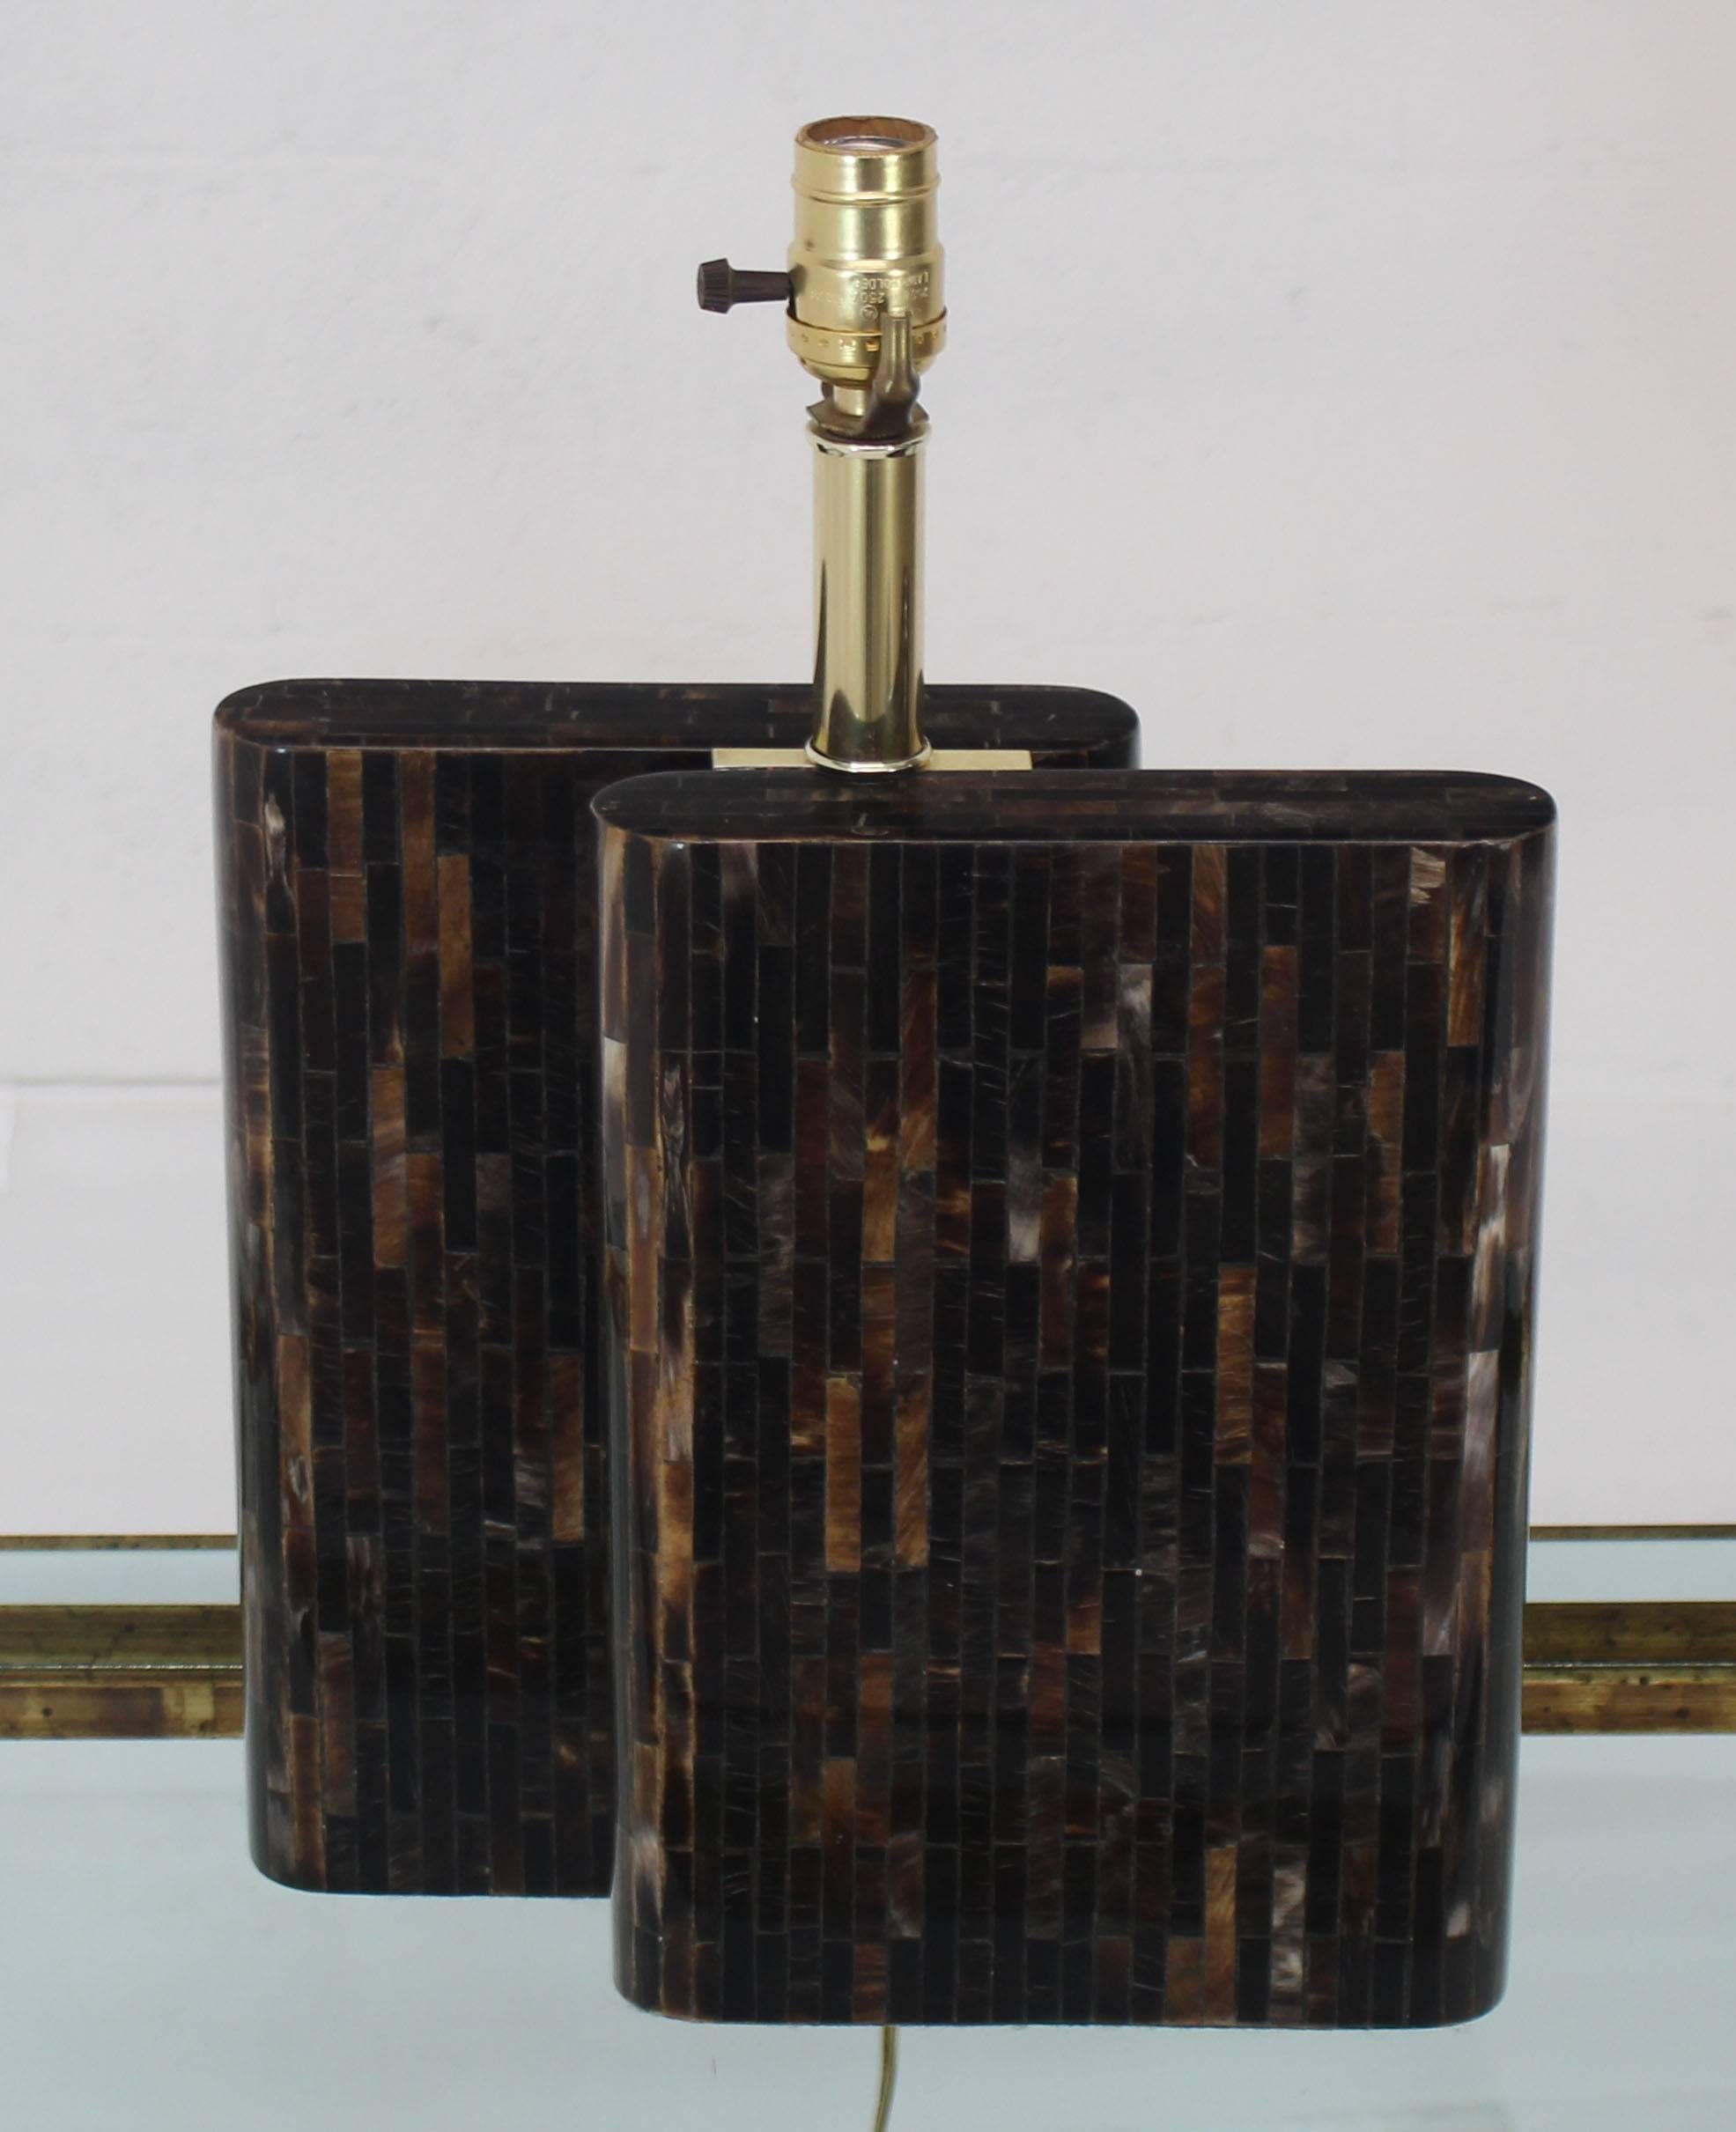 Sharp looking mid century modern tessellated dark bone table lamp.